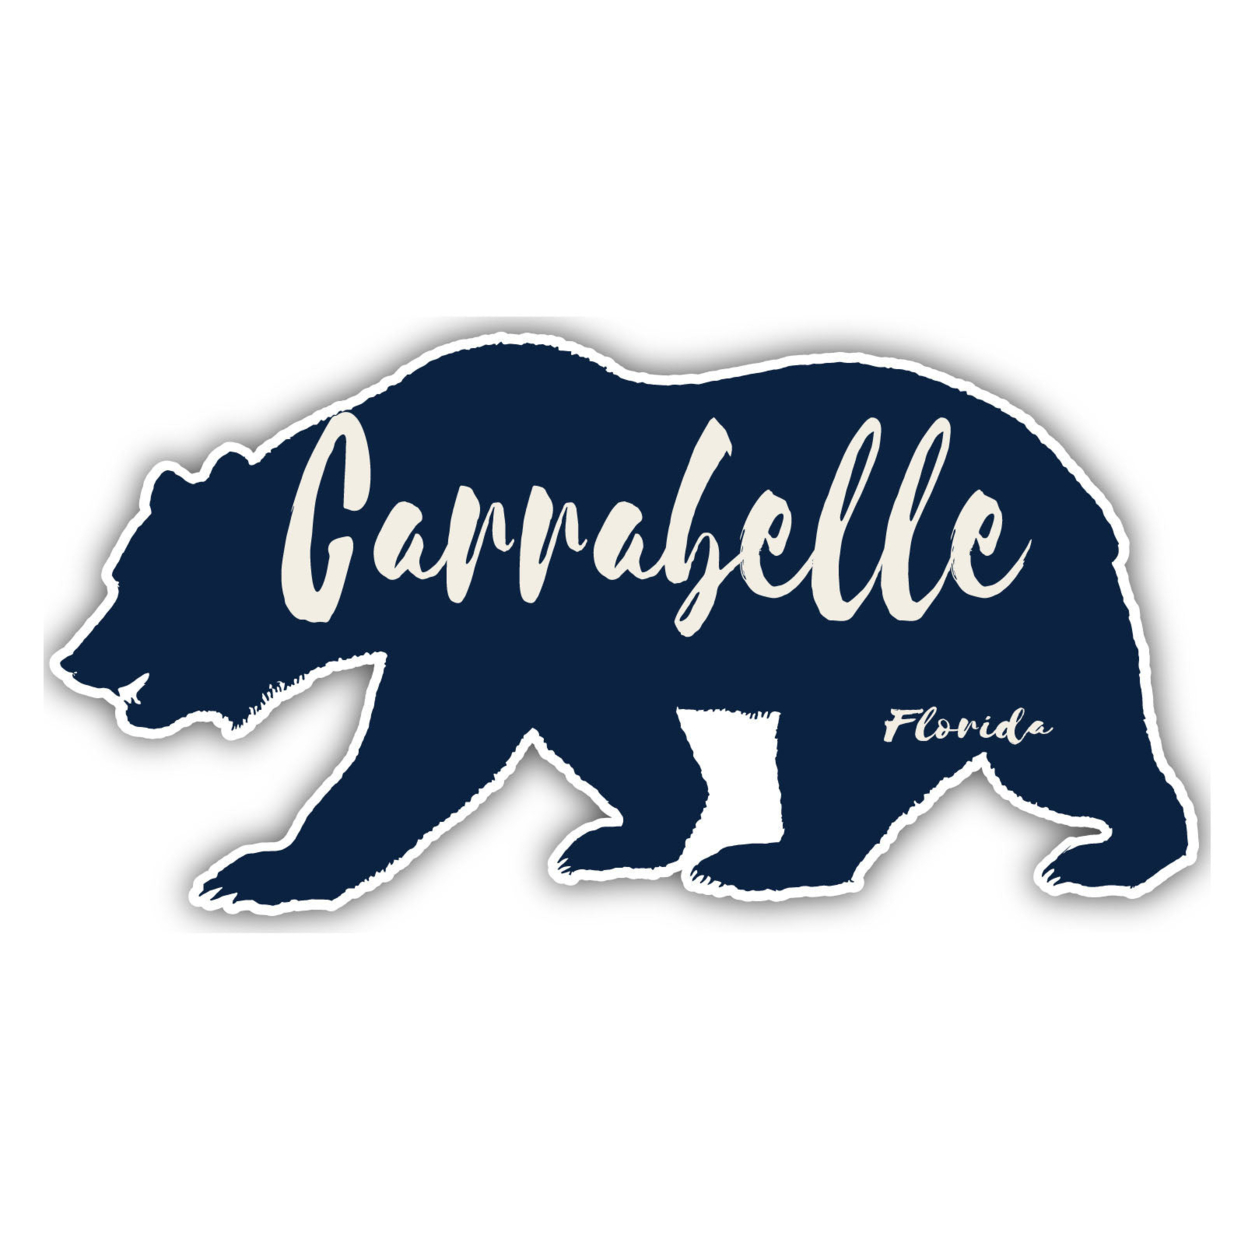 Carrabelle Florida Souvenir Decorative Stickers (Choose Theme And Size) - Single Unit, 6-Inch, Bear